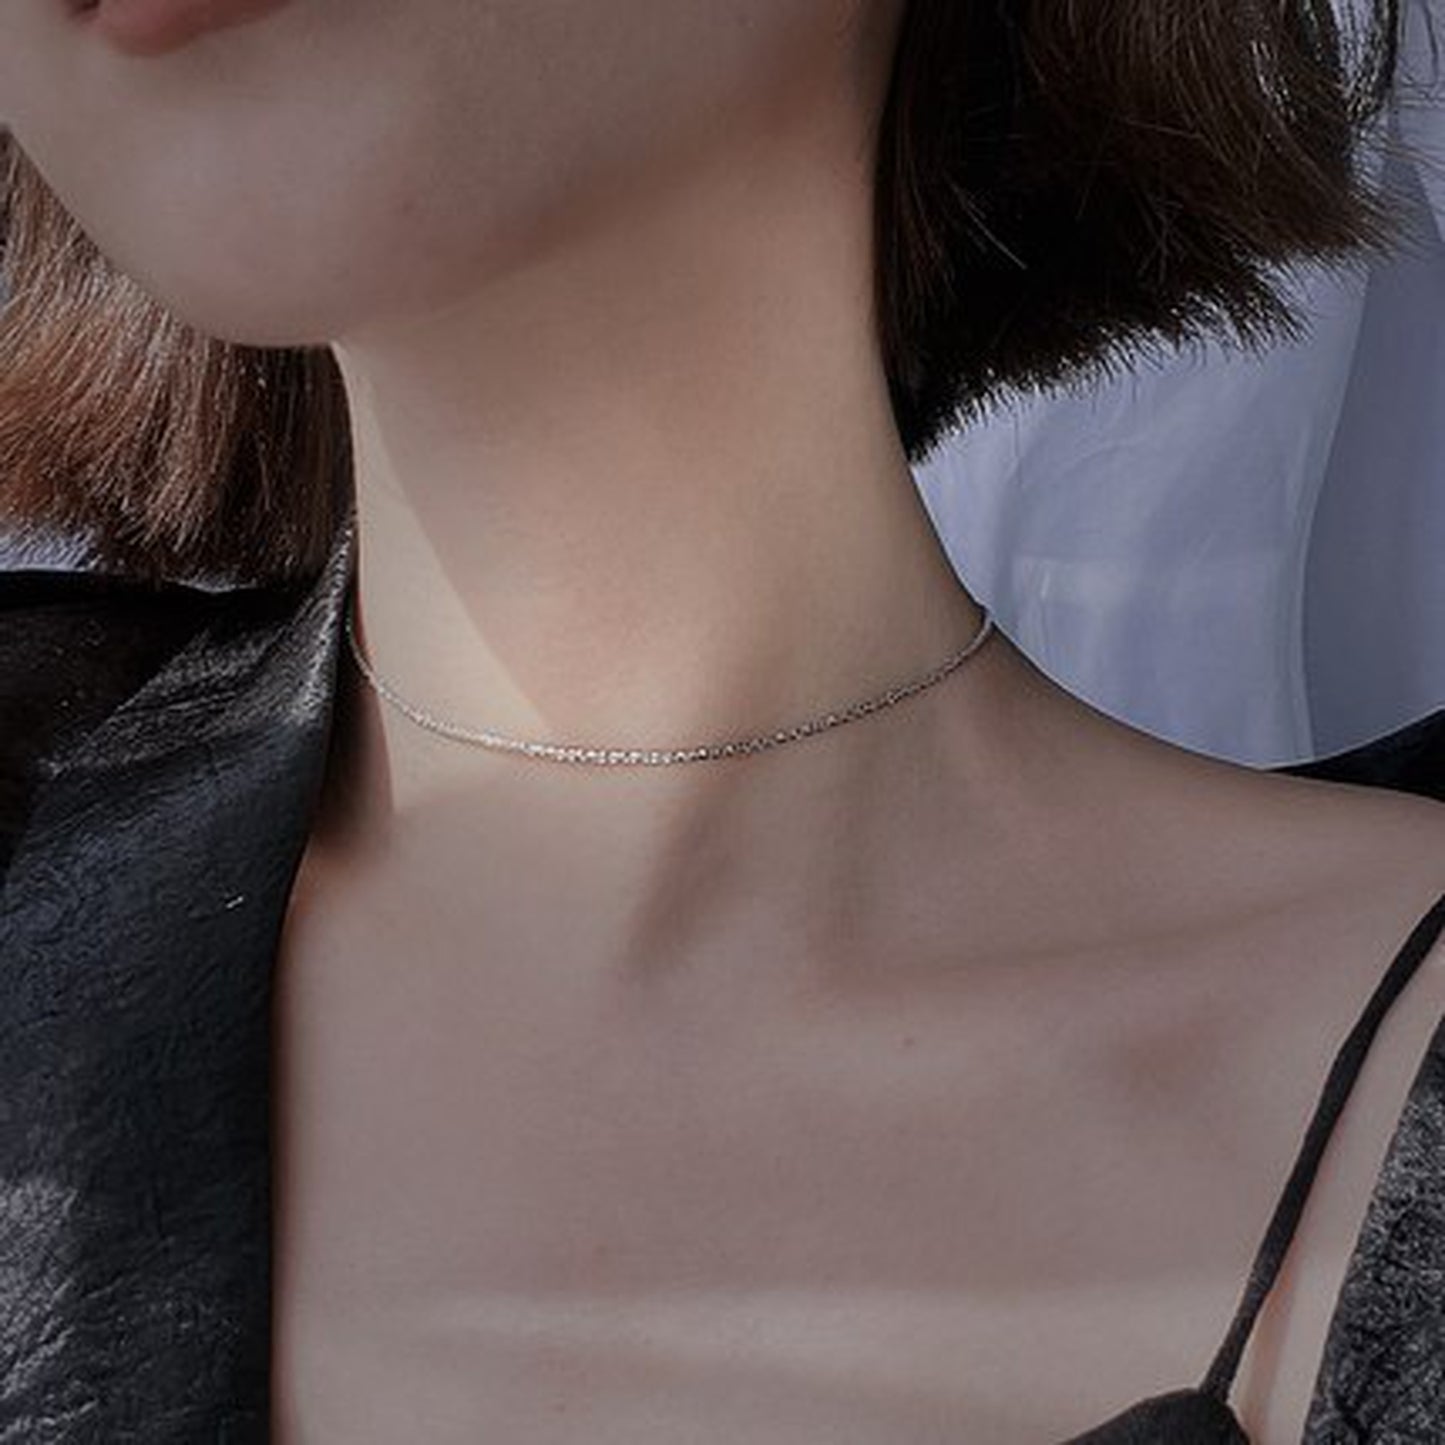 Simple silver necklace 5549